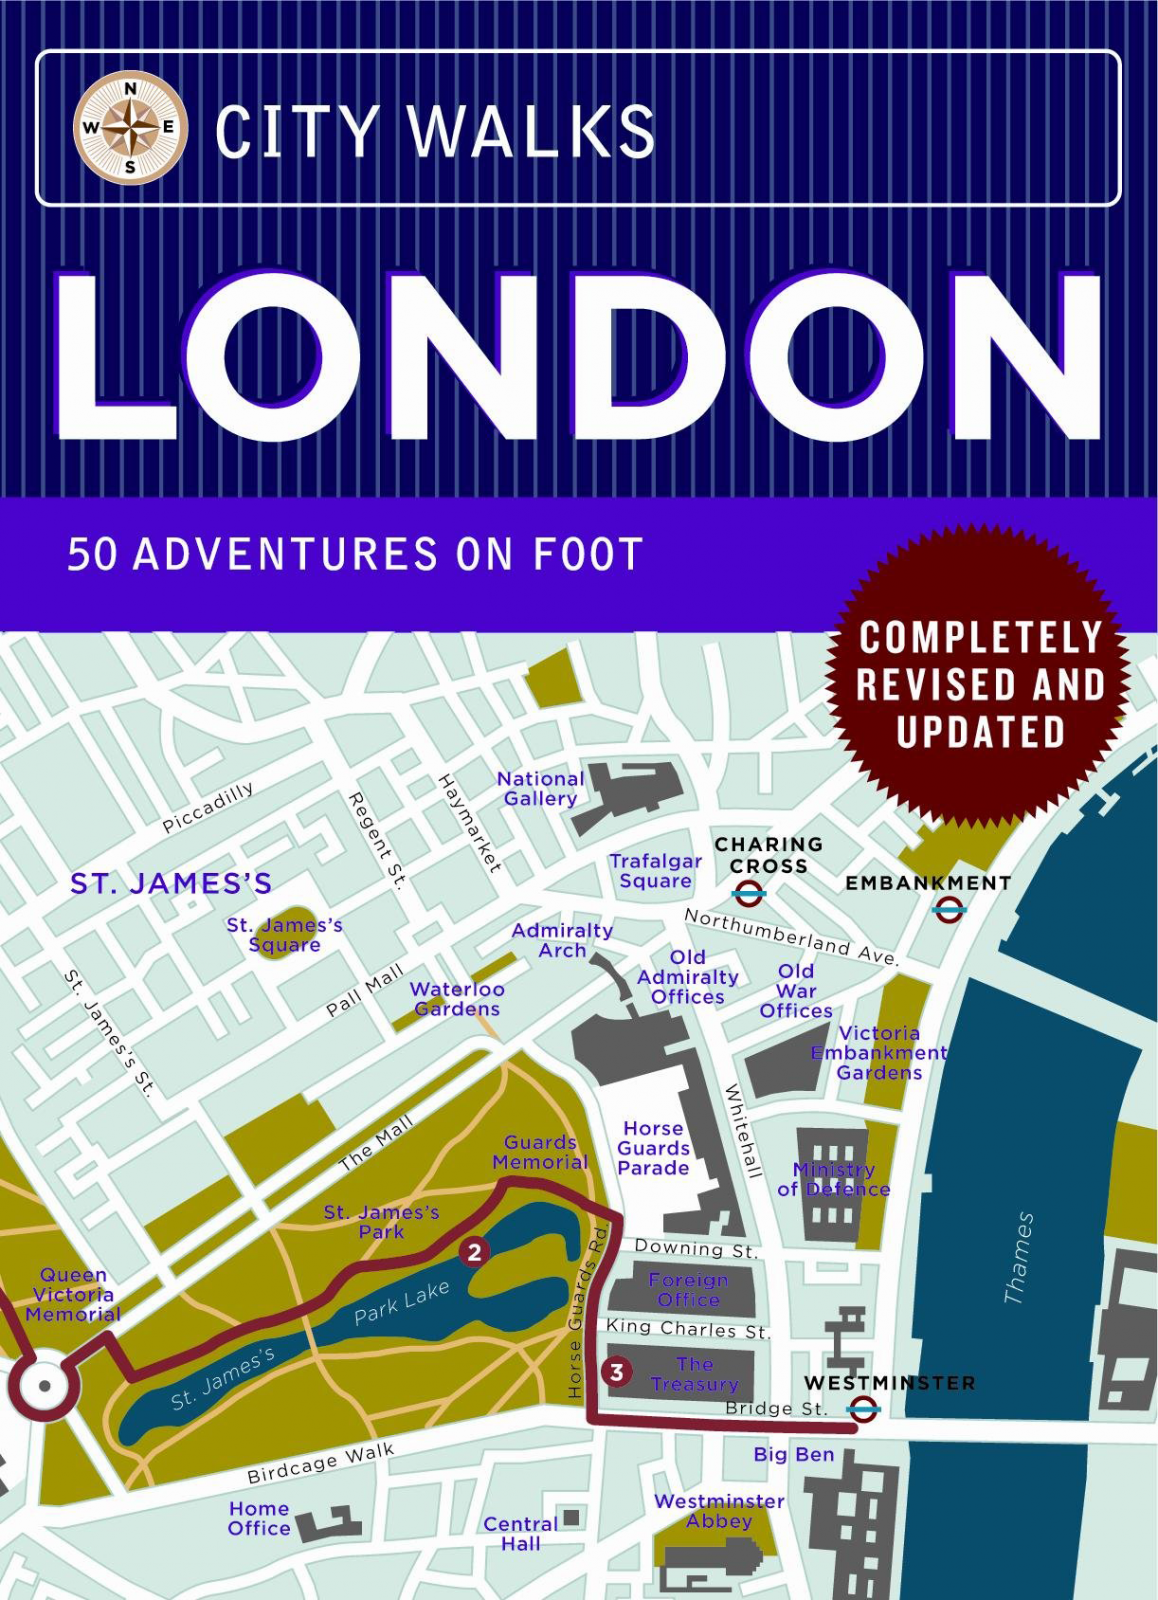 City Walks Guide - London